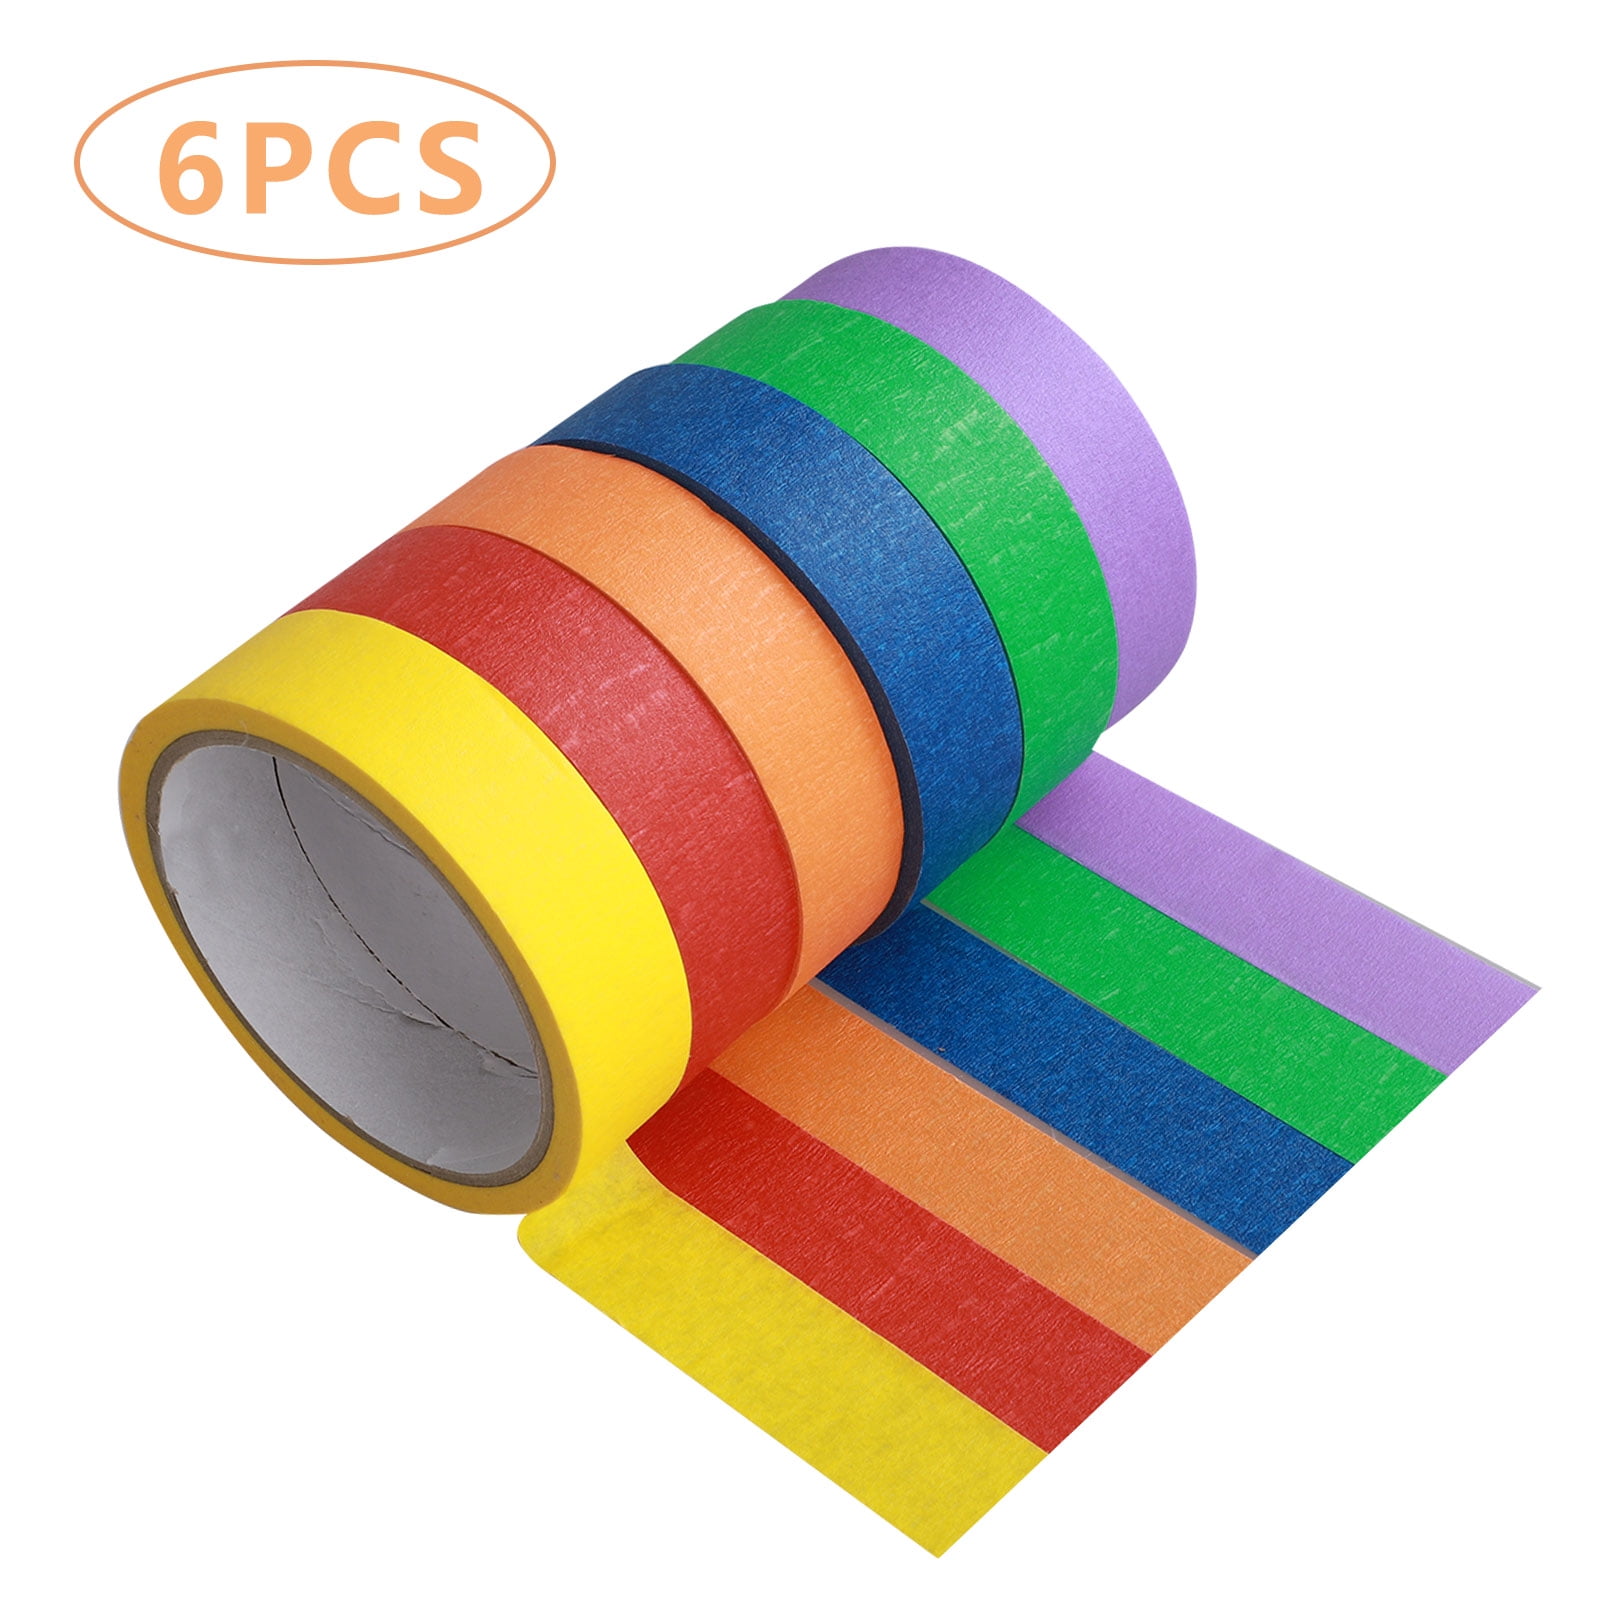 God følelse brevpapir prins 6pcs Colored Masking Tape, EEEkit Colored Painters Tape for Arts & Crafts,  Labeling or Coding - Art Supplies for Kids - 6 Different Color Rolls -  Artist Masking Tape 1 Inch x